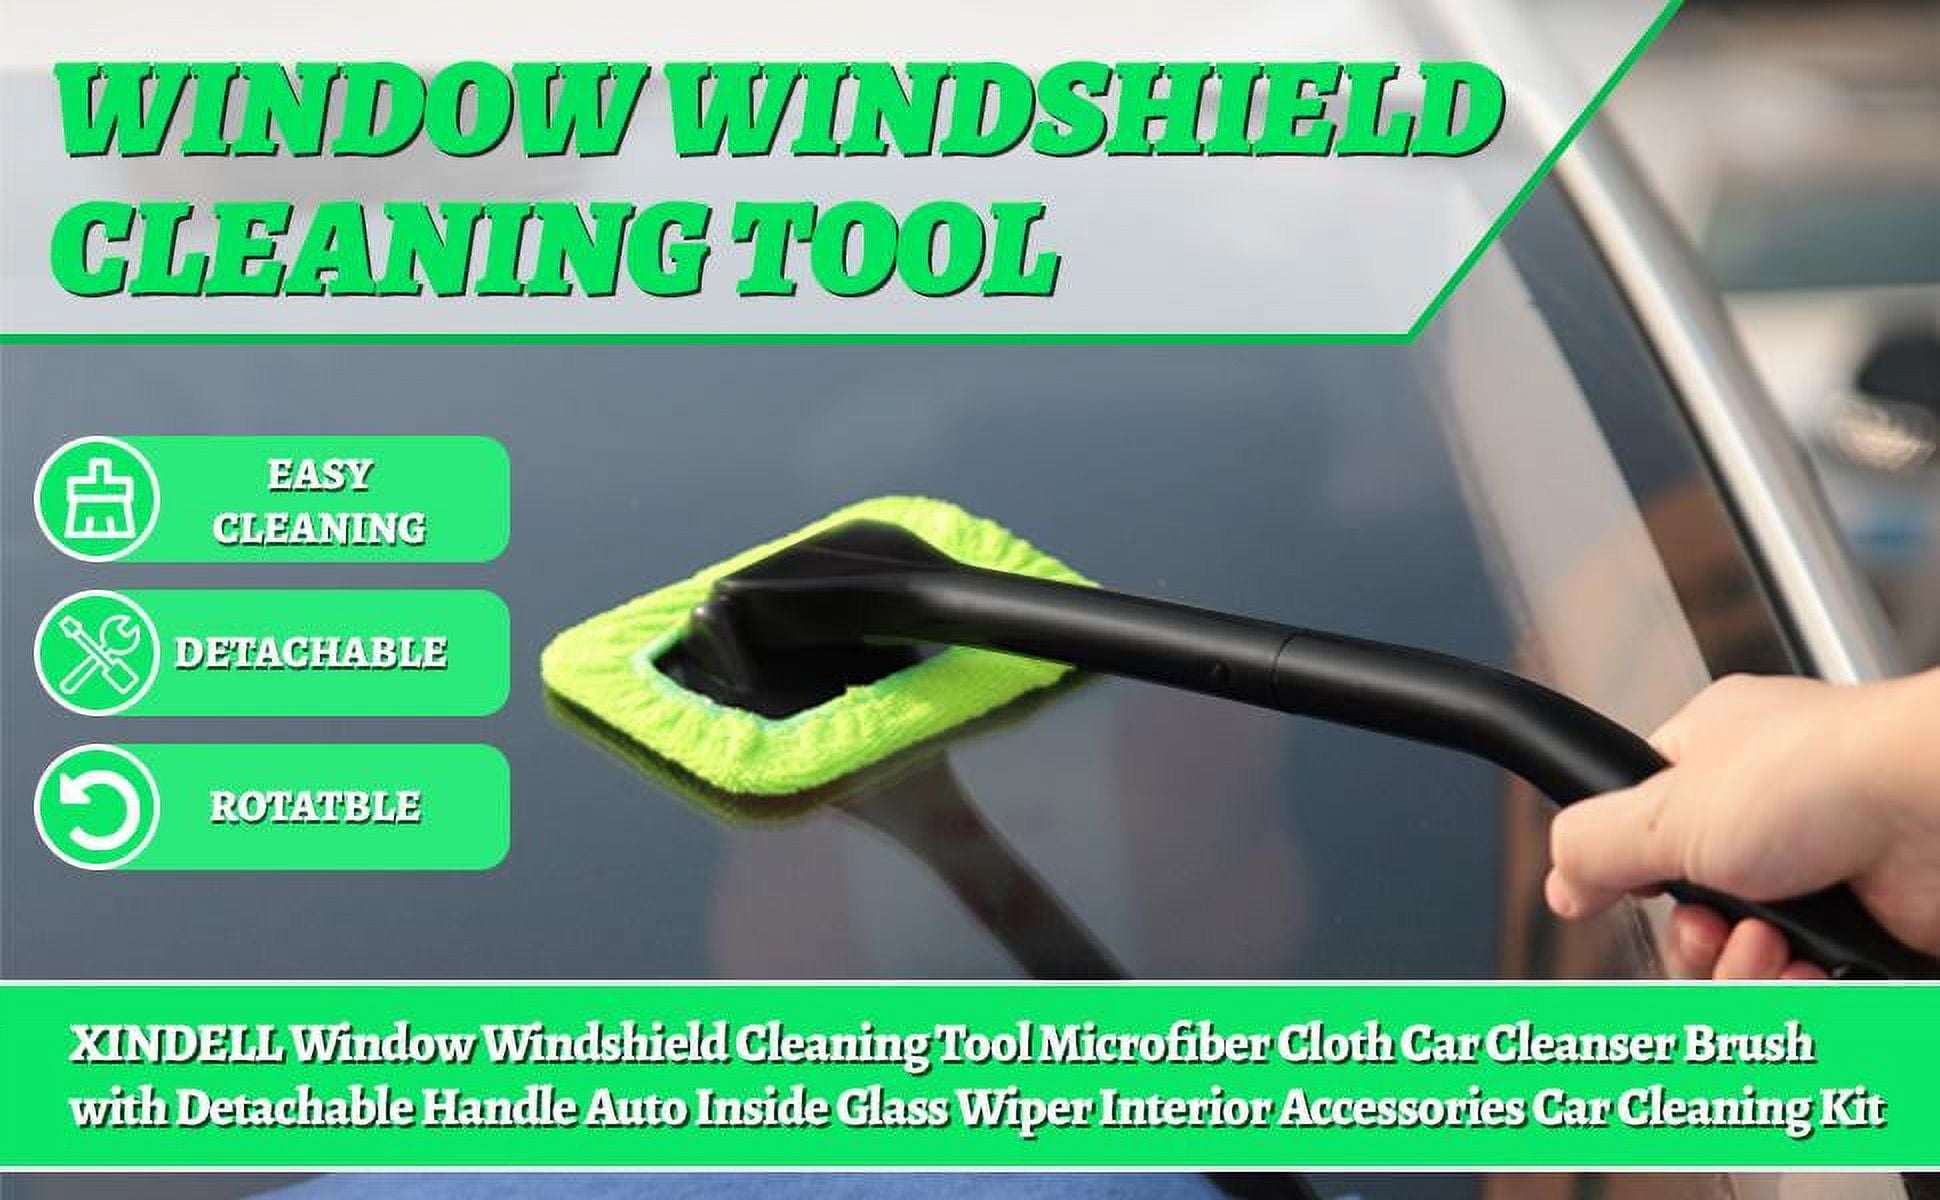 Multipurpose Handheld Brush for Car Door Window Seal Strip Cleaning and